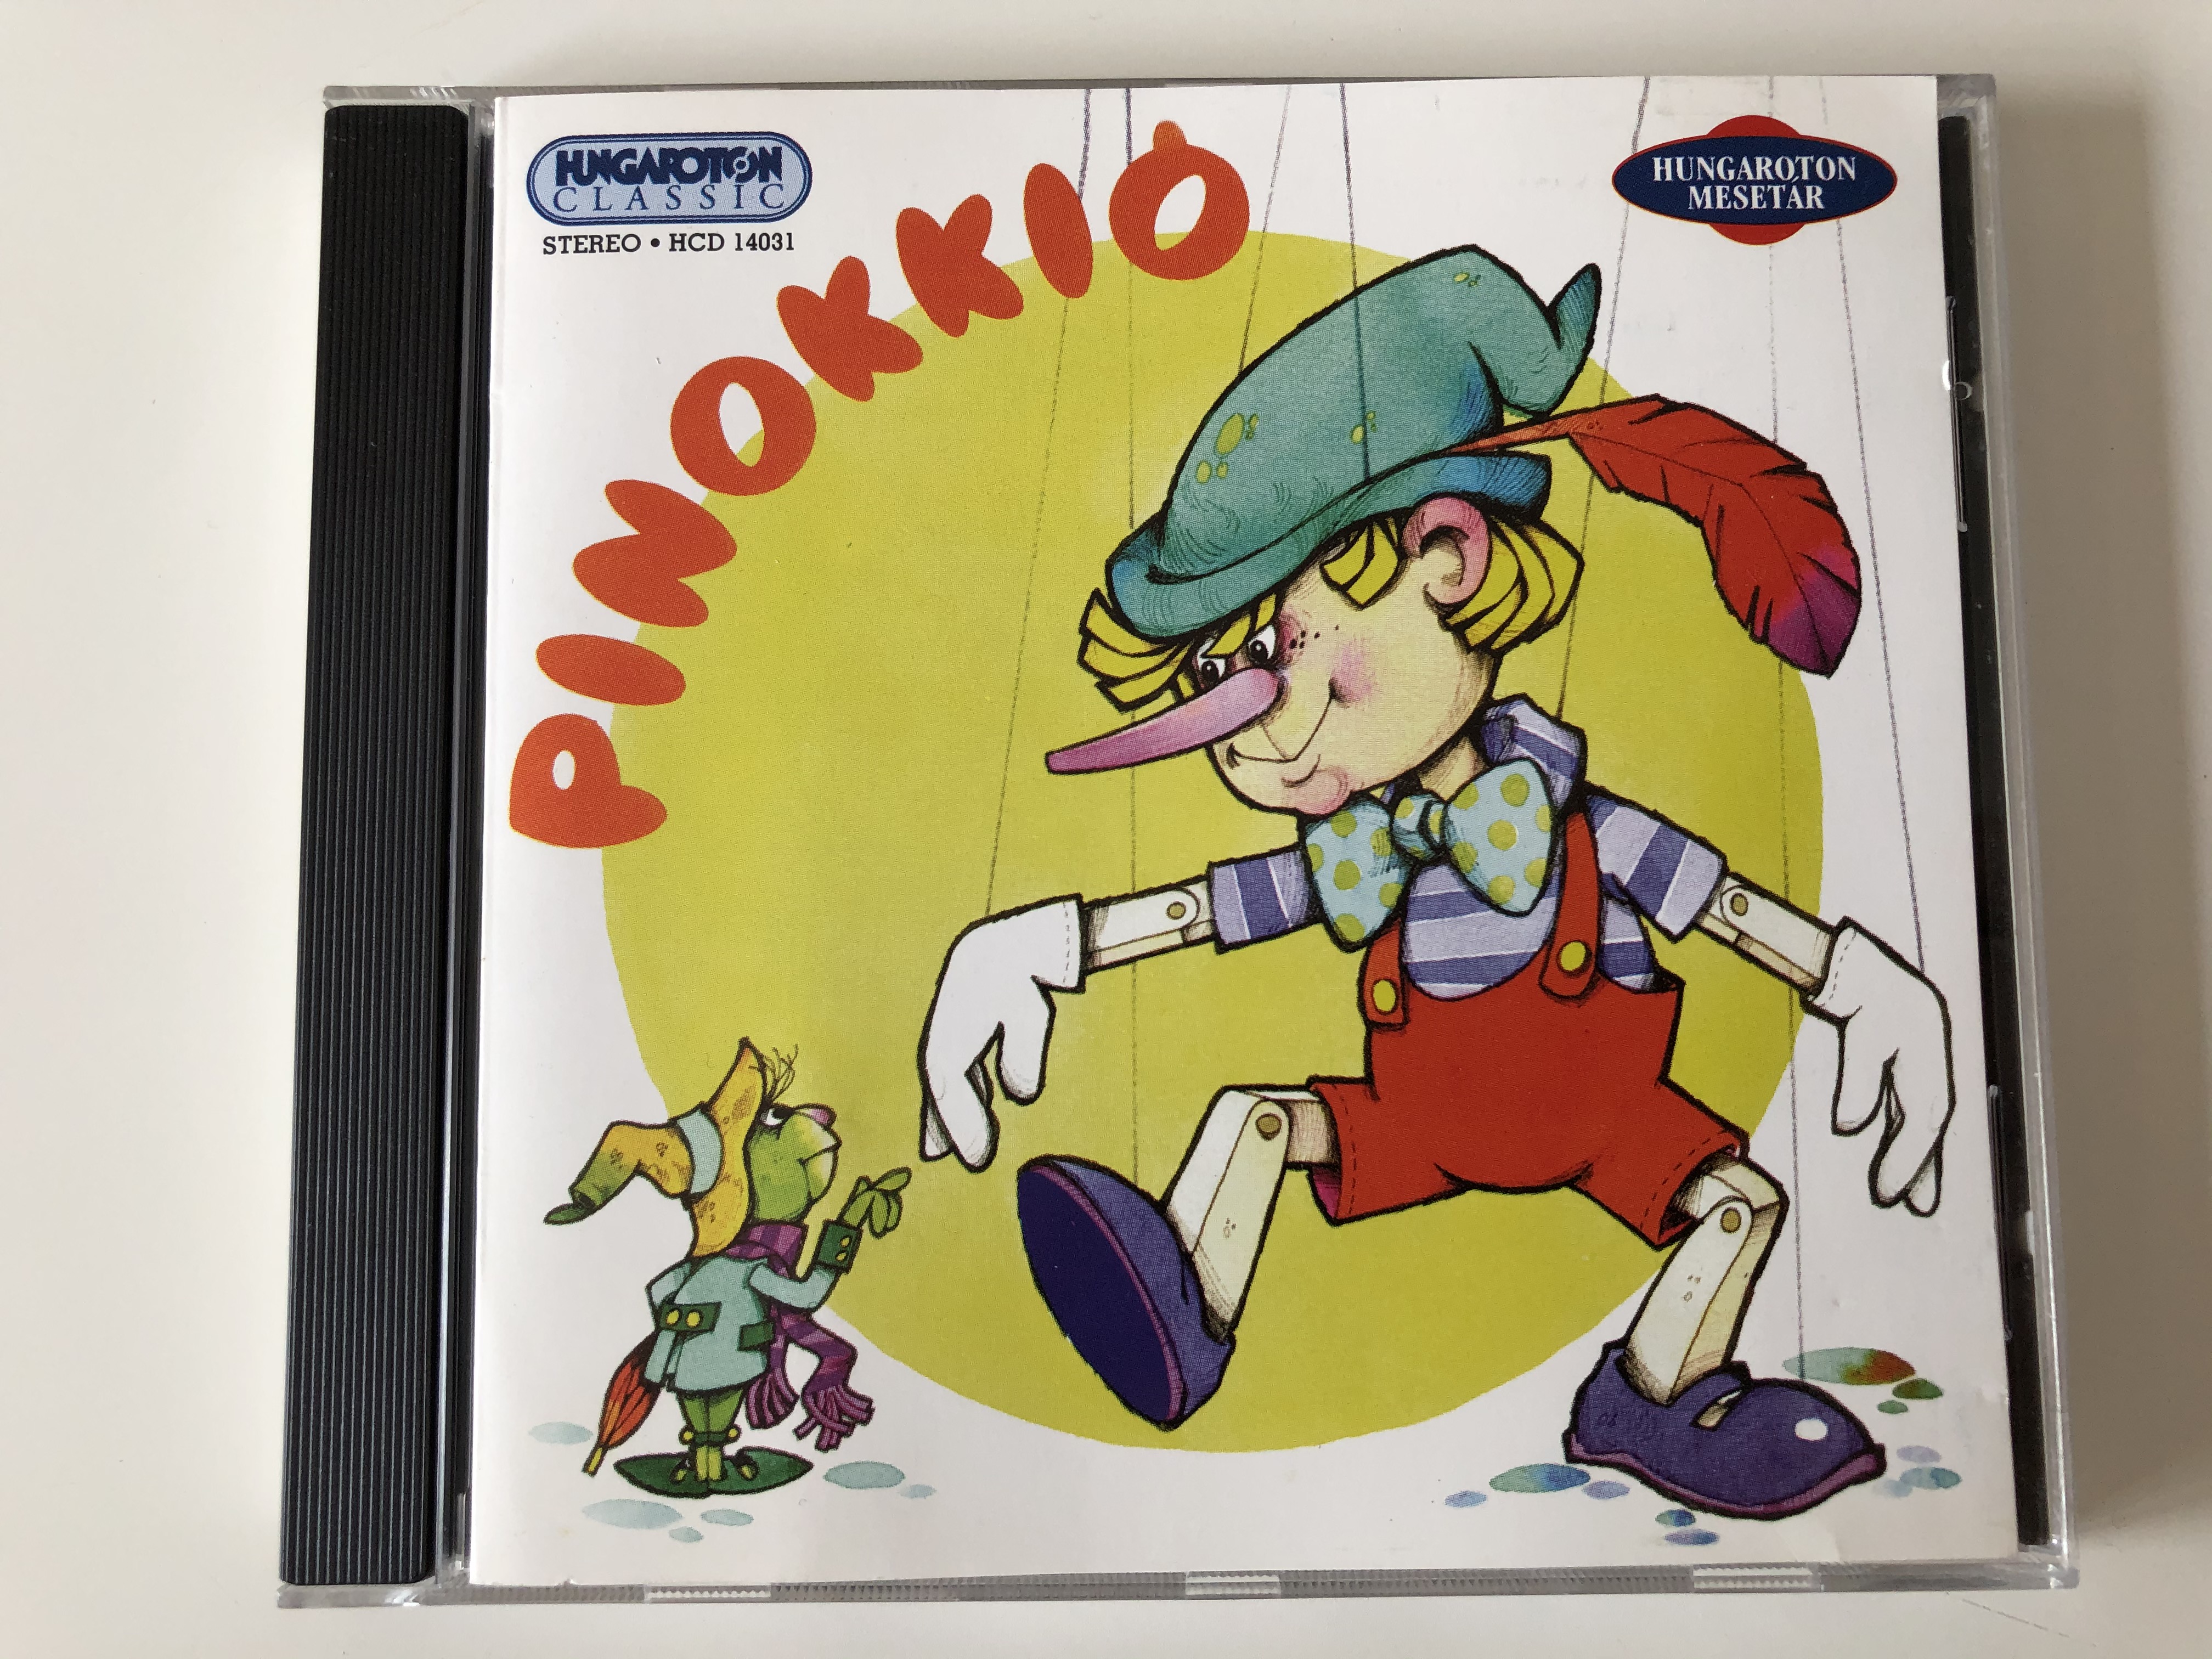 pinokkio-hungaroton-classic-audio-cd-2000-stereo-hcd-14031-1-.jpg